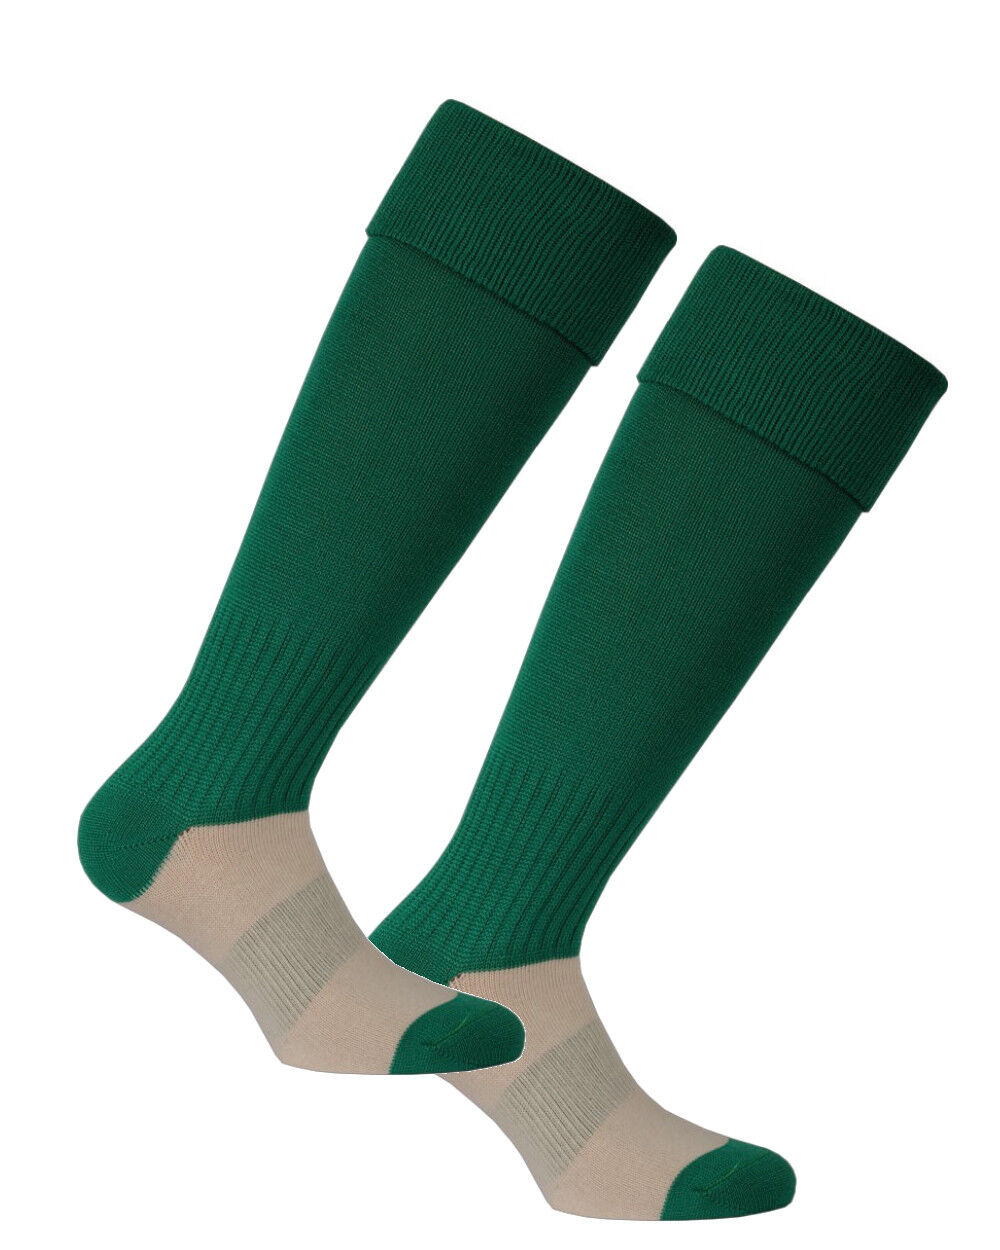 Dunlop Pedaci Calzettoni Calcio Socks Unisex Verde polipropilene made in italy